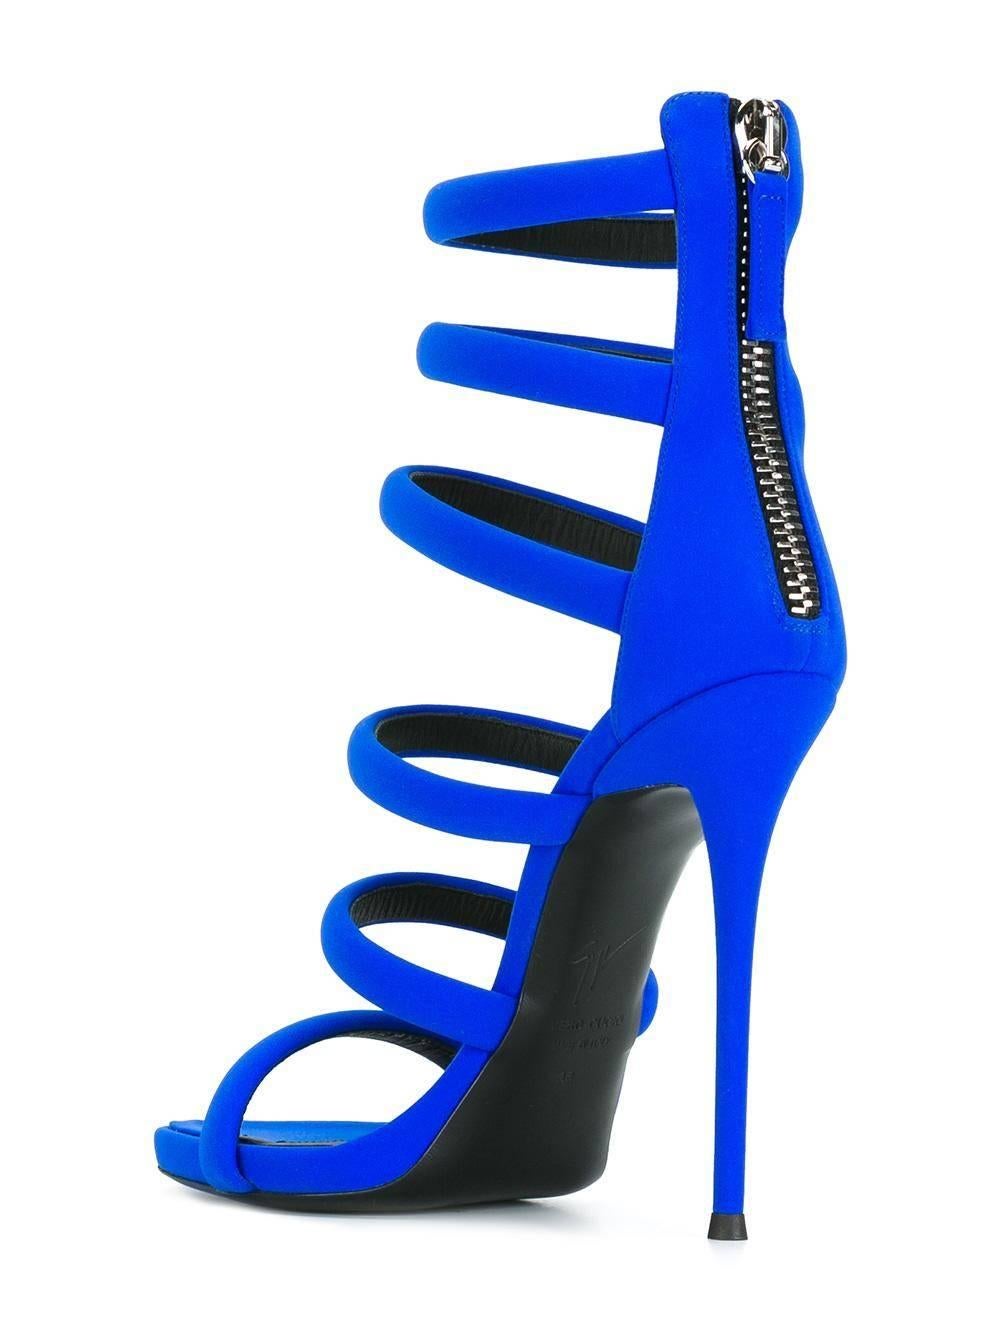 blue strappy heels